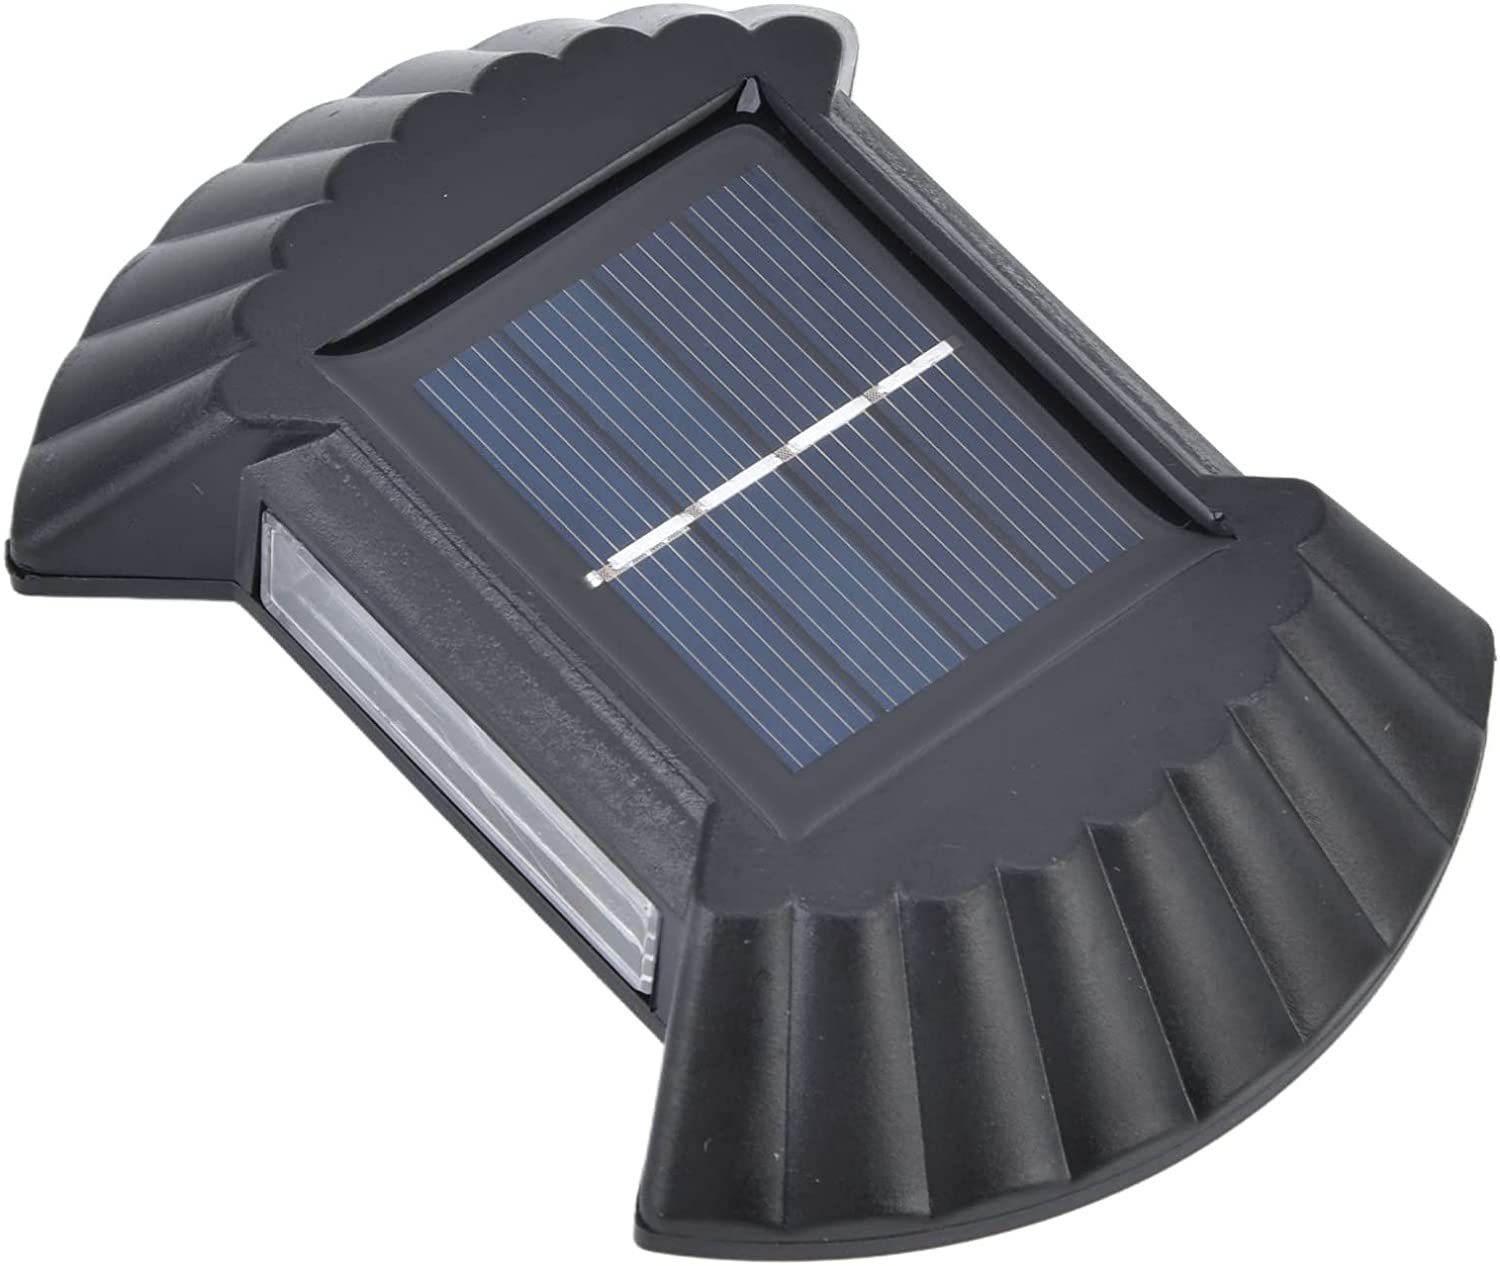 Luminaria Solar Led Parede Arandela Kit 4 Uni Resistente Spot Balizador Enfeite Escada Quintal - 10